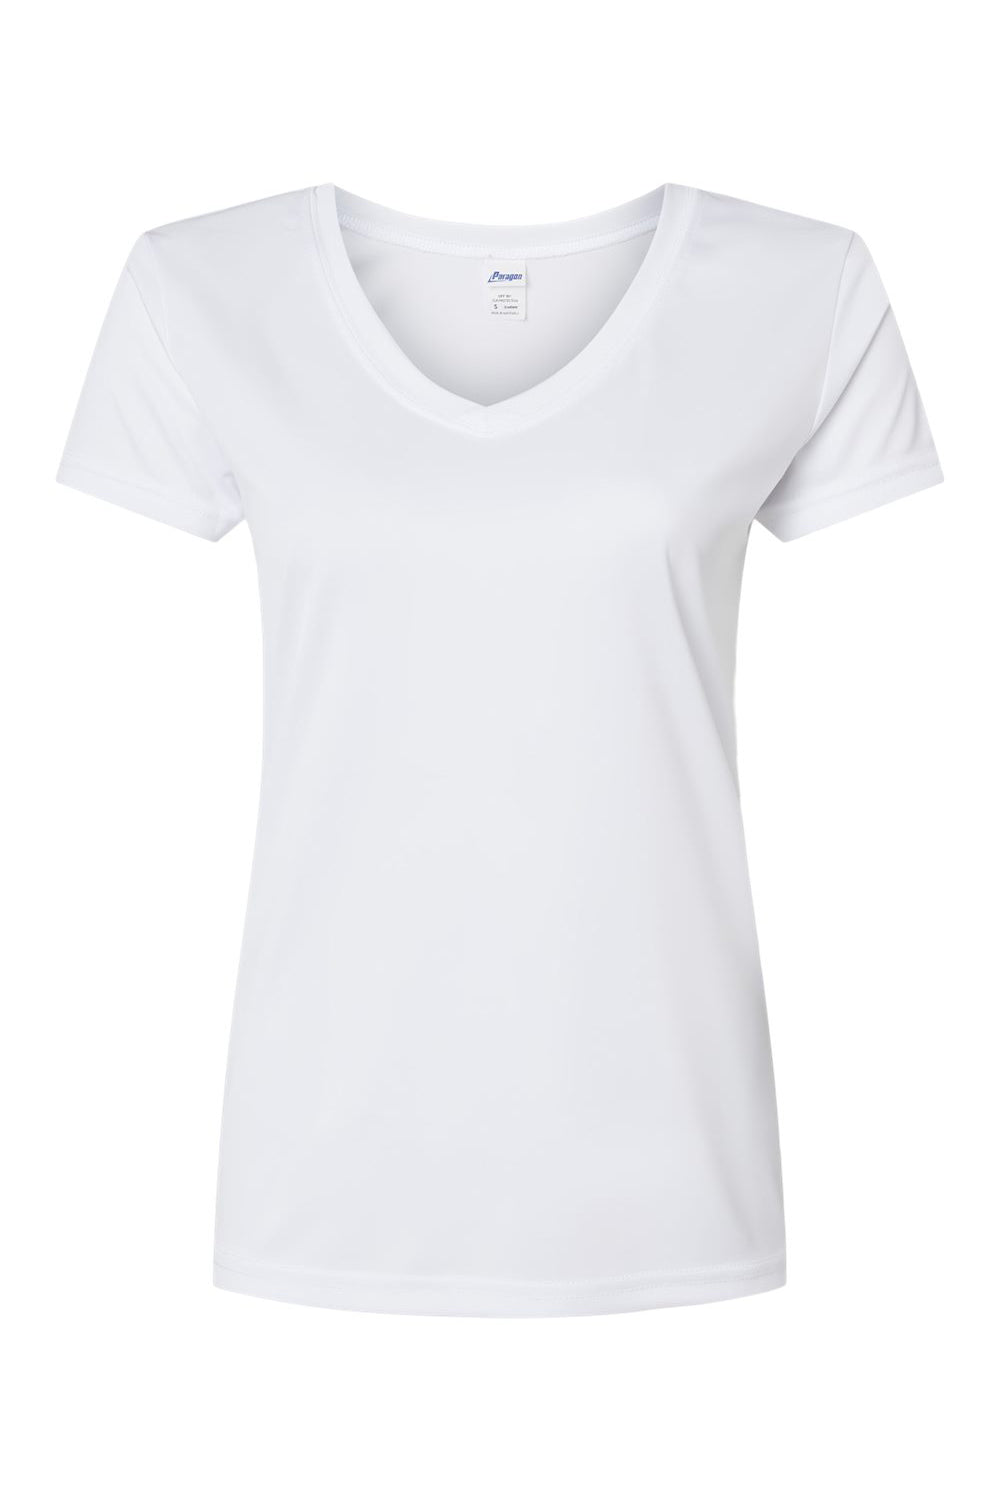 Paragon 203 Womens Vera Short Sleeve V-Neck T-Shirt White Flat Front